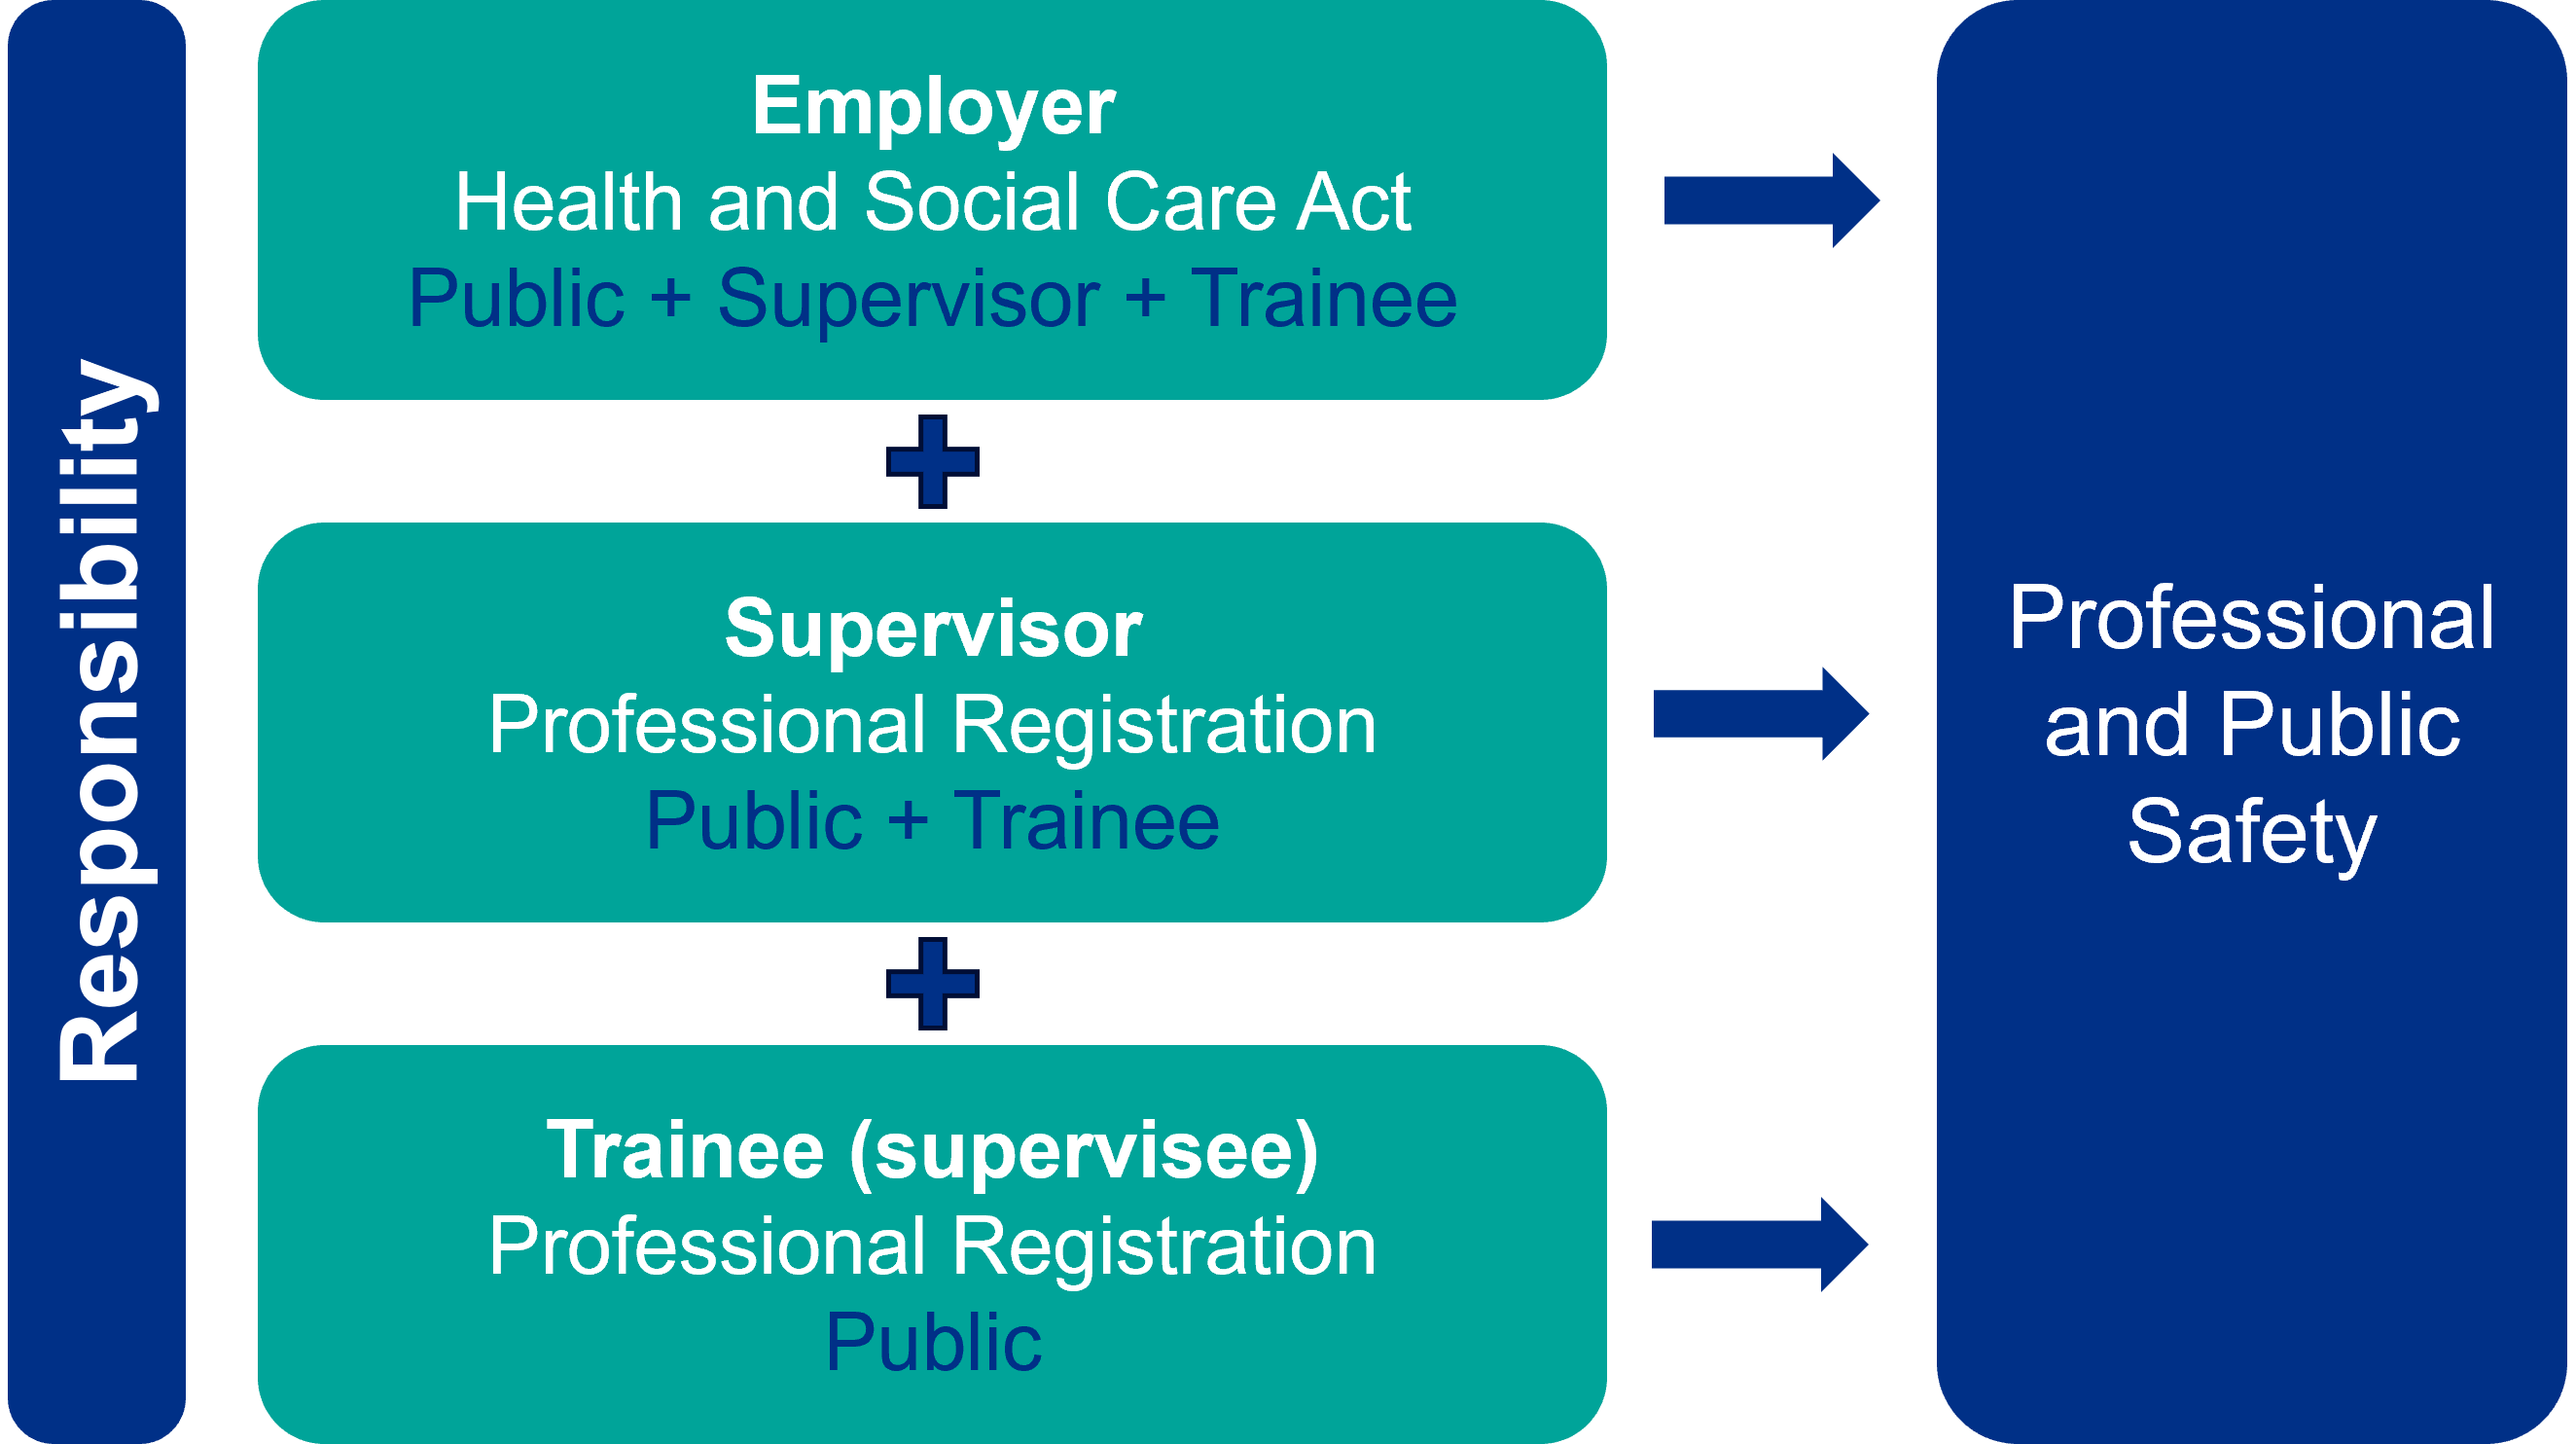 Employer Supervisor and Trainee responsibilities in advanced practice.
Supervisor Capabilities